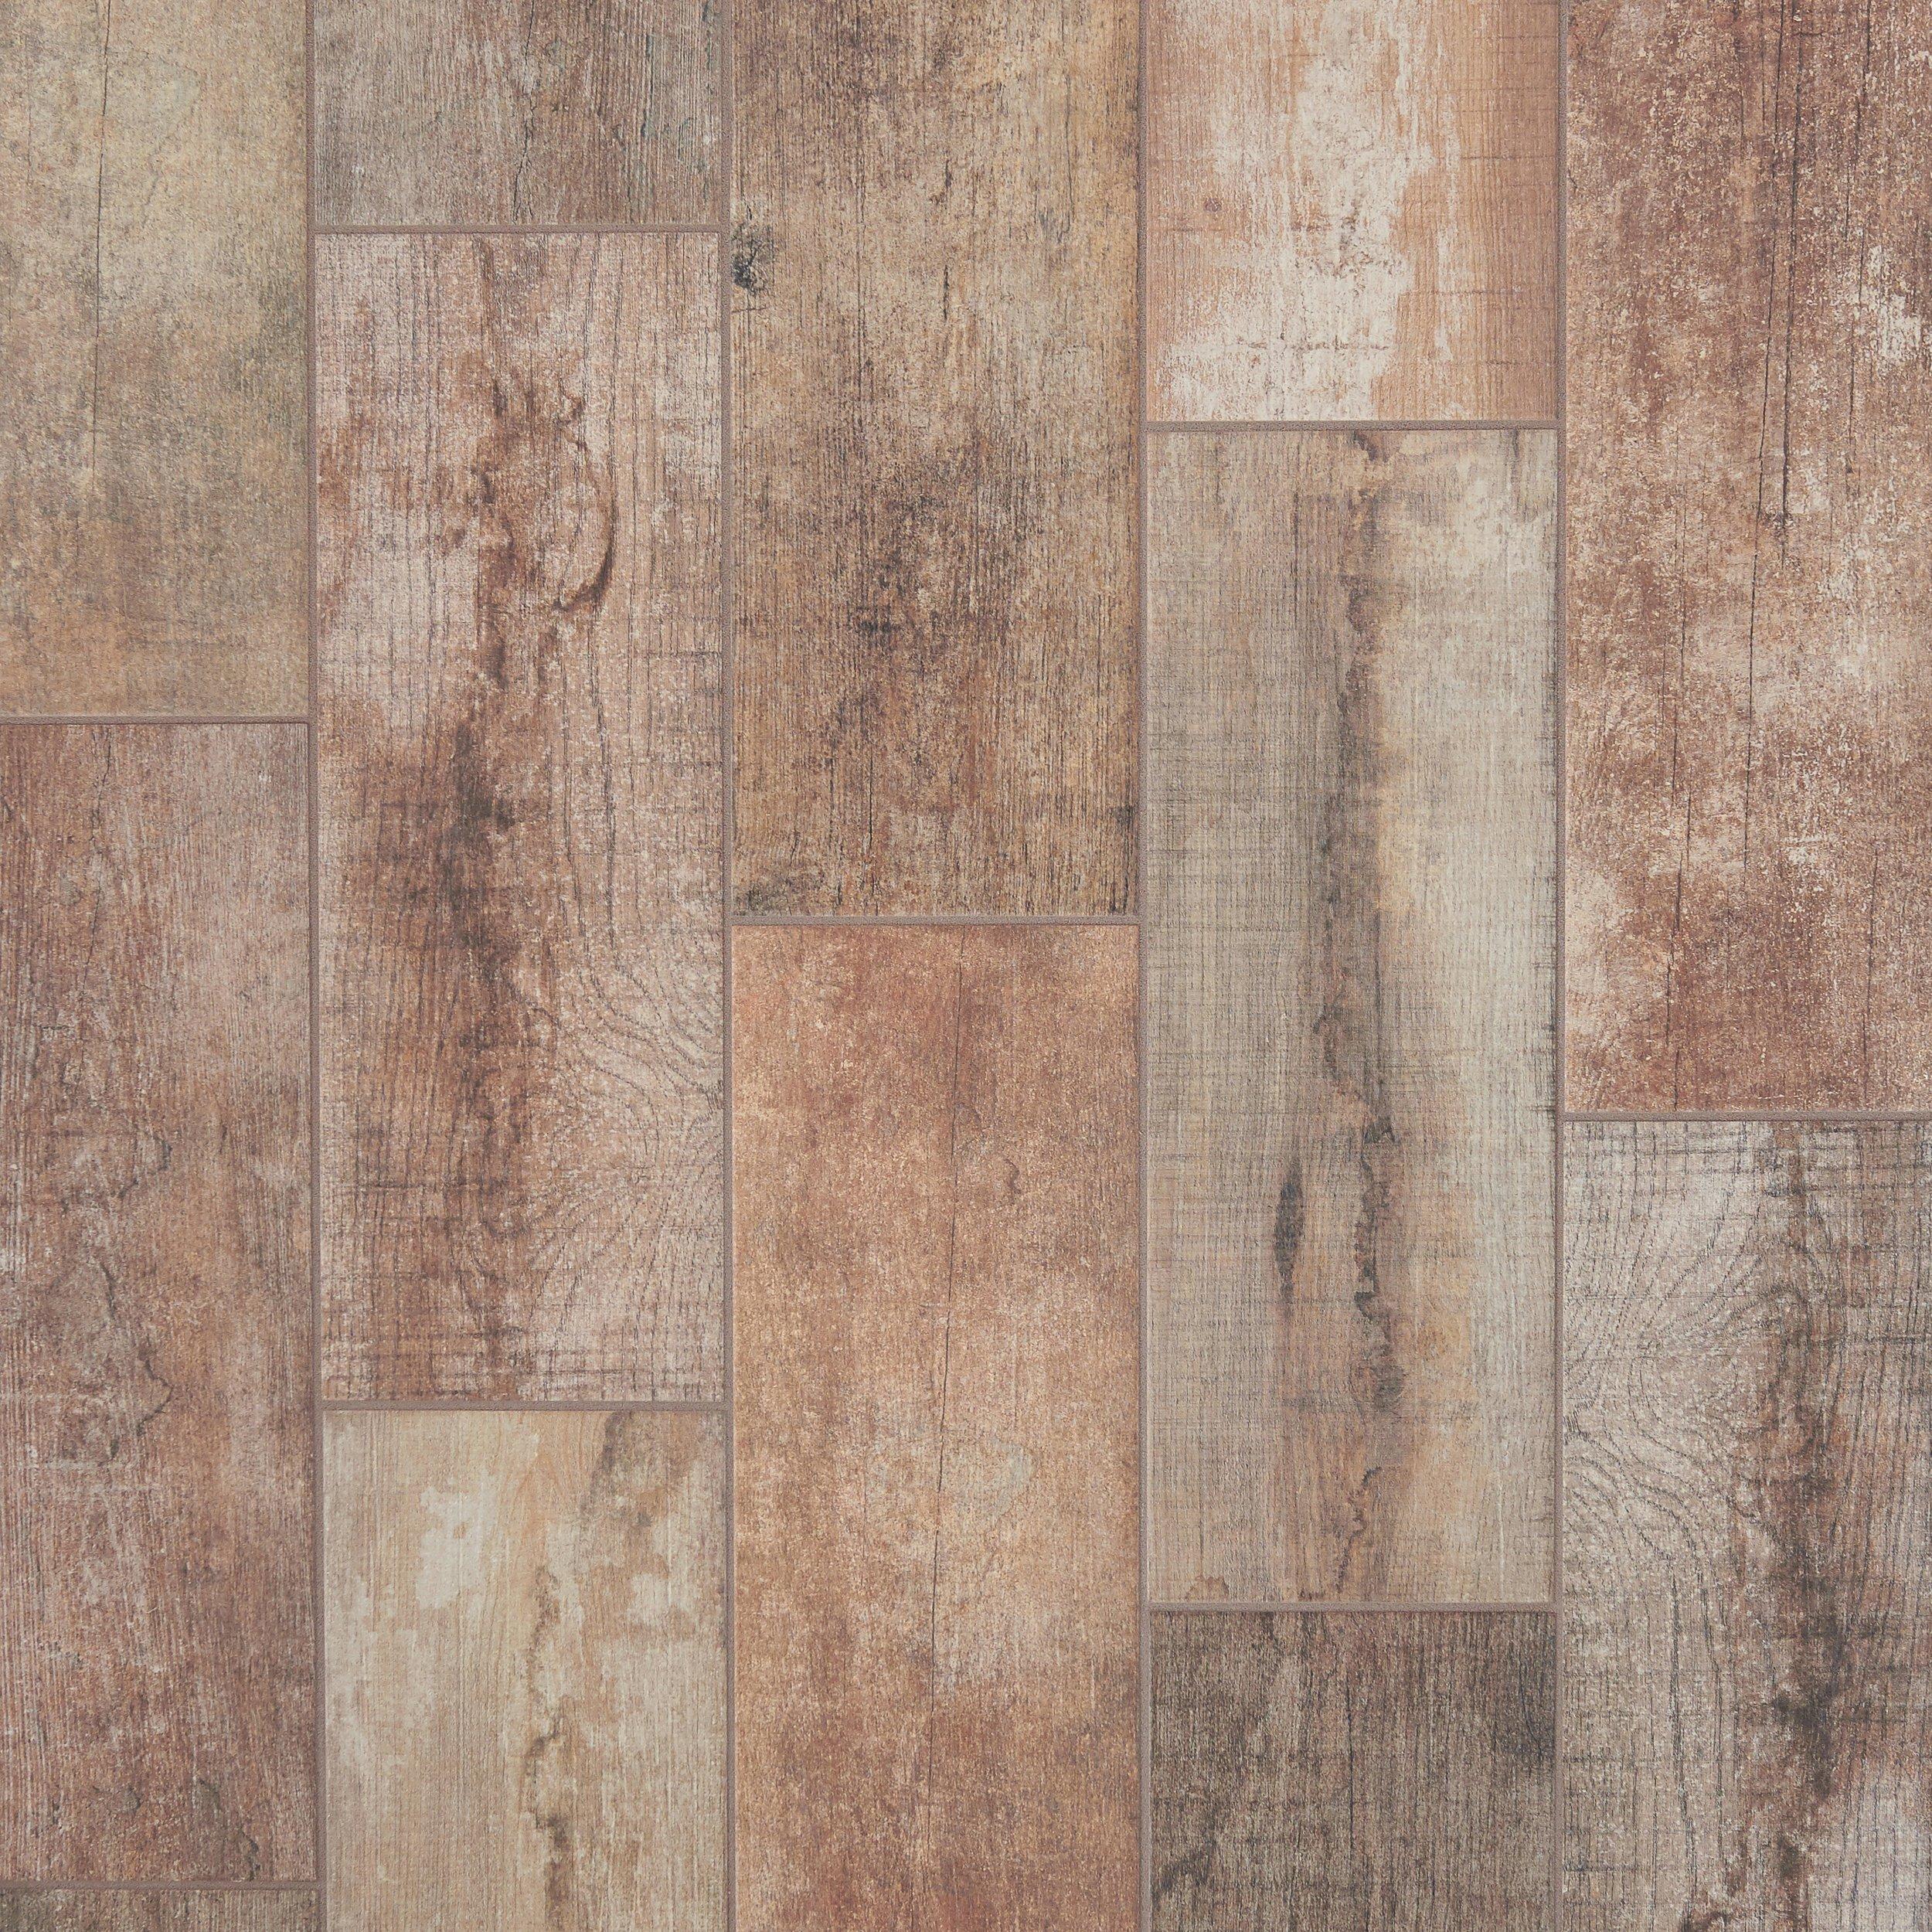 Julyo Wood Plank Ceramic Tile 7 X 20 100066737 Floor And Decor